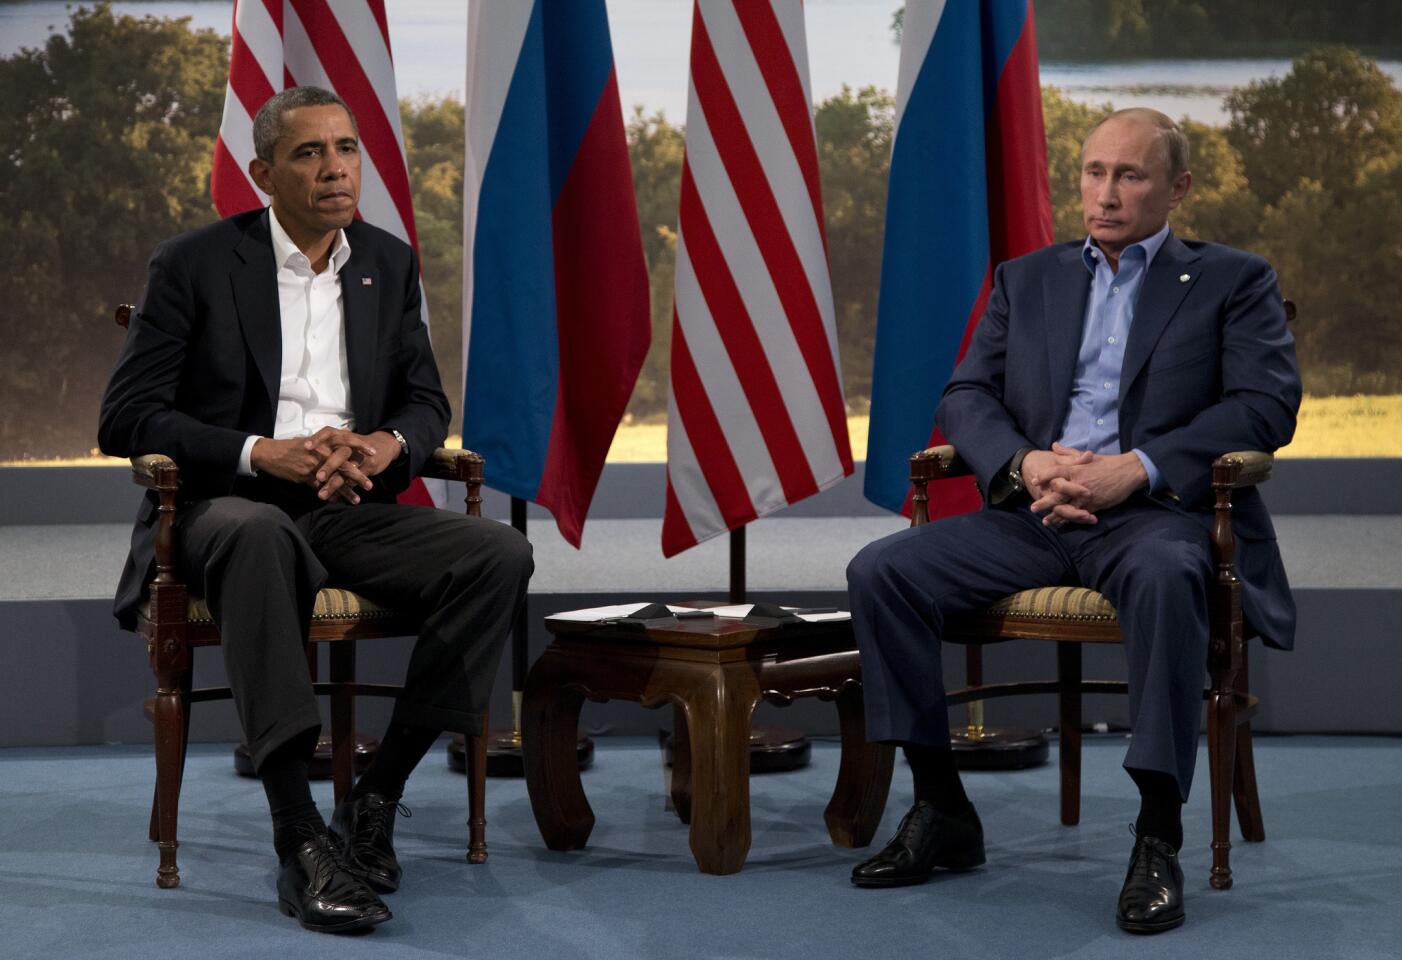 Obama and Putin's awkward sit-down